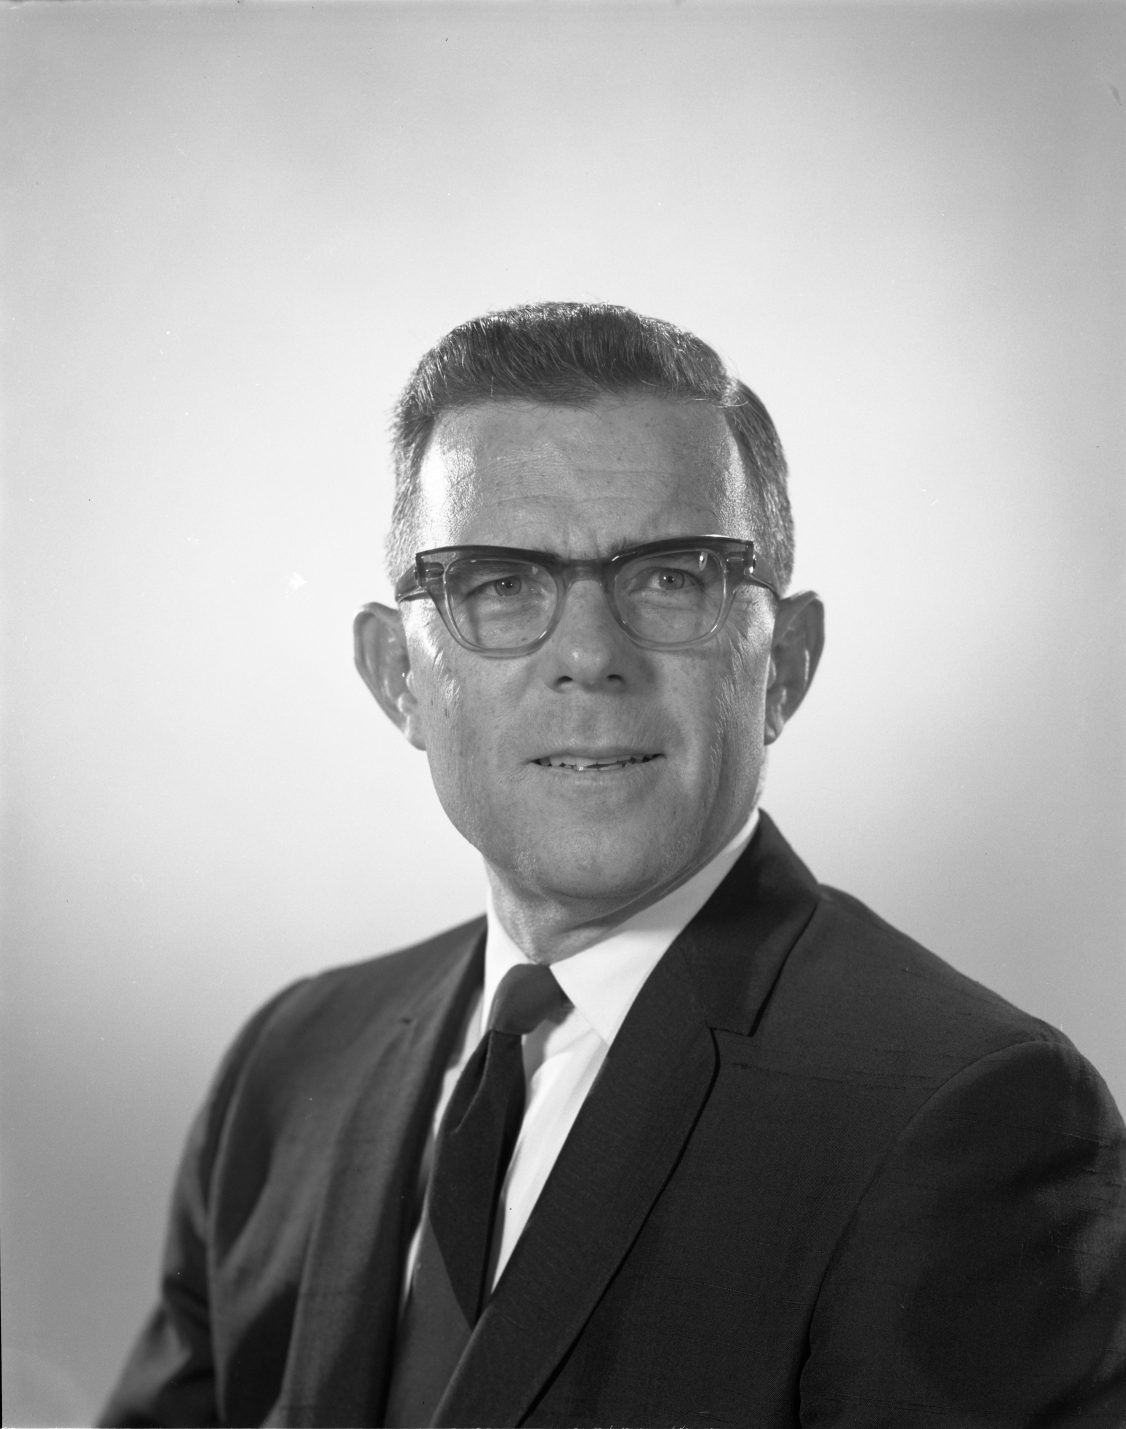 Black and white portrait of President Halladay